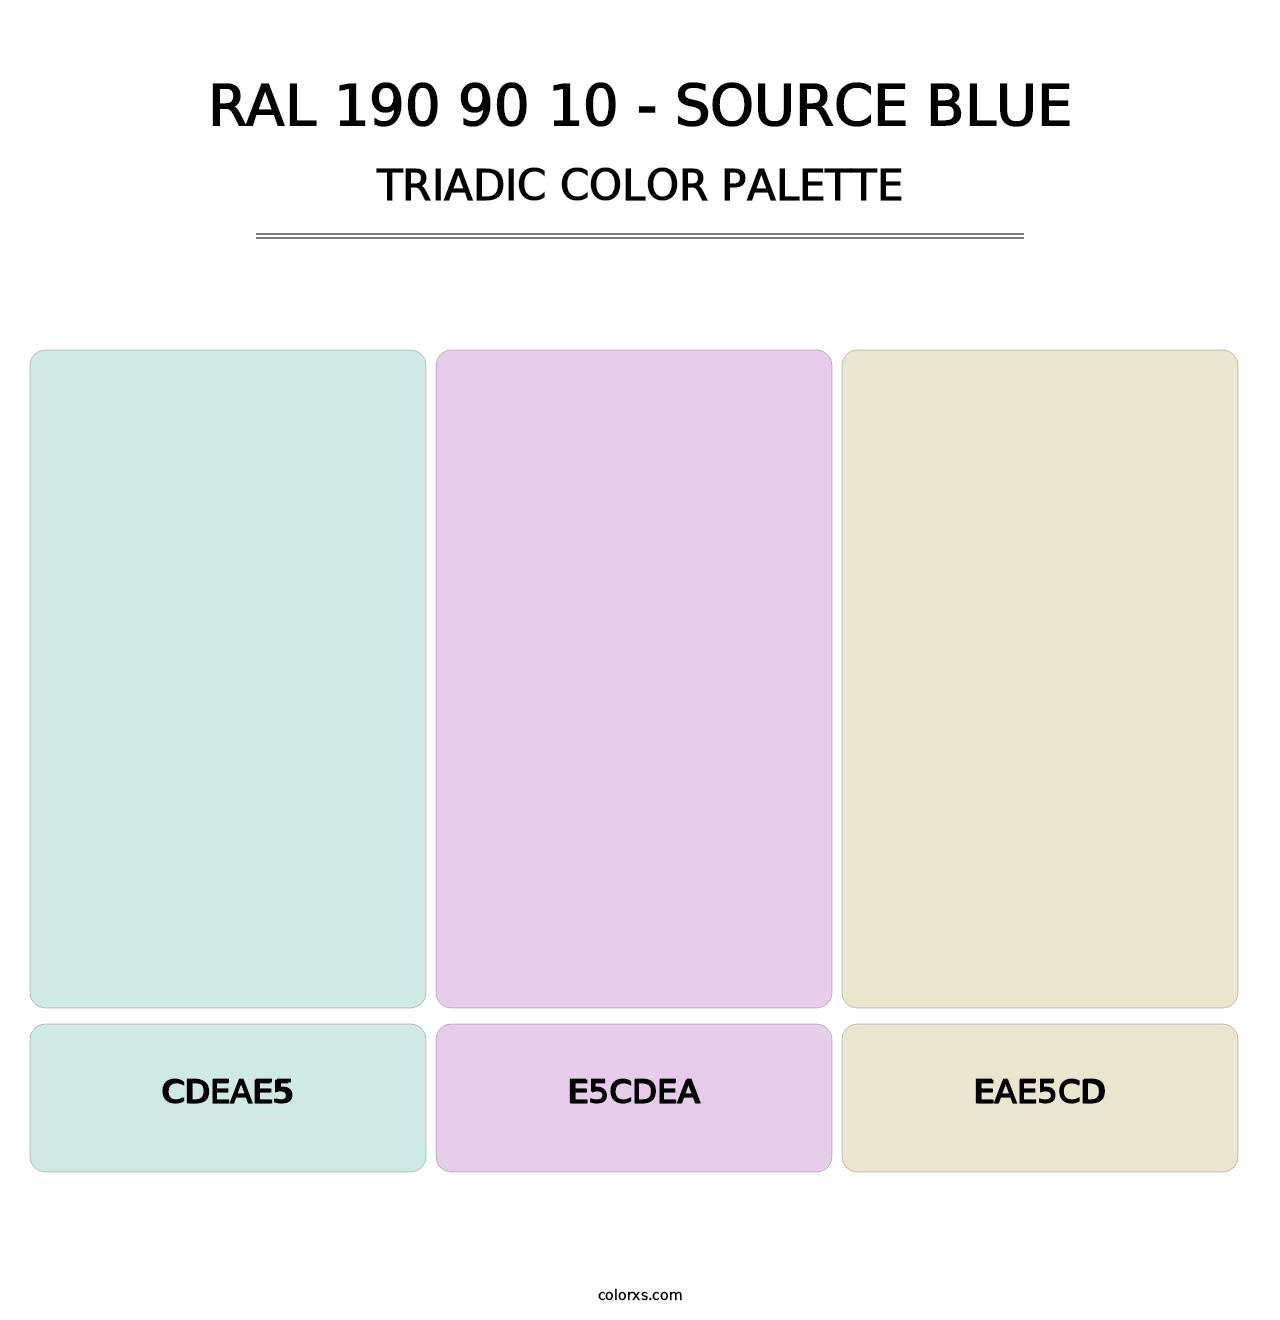 RAL 190 90 10 - Source Blue - Triadic Color Palette